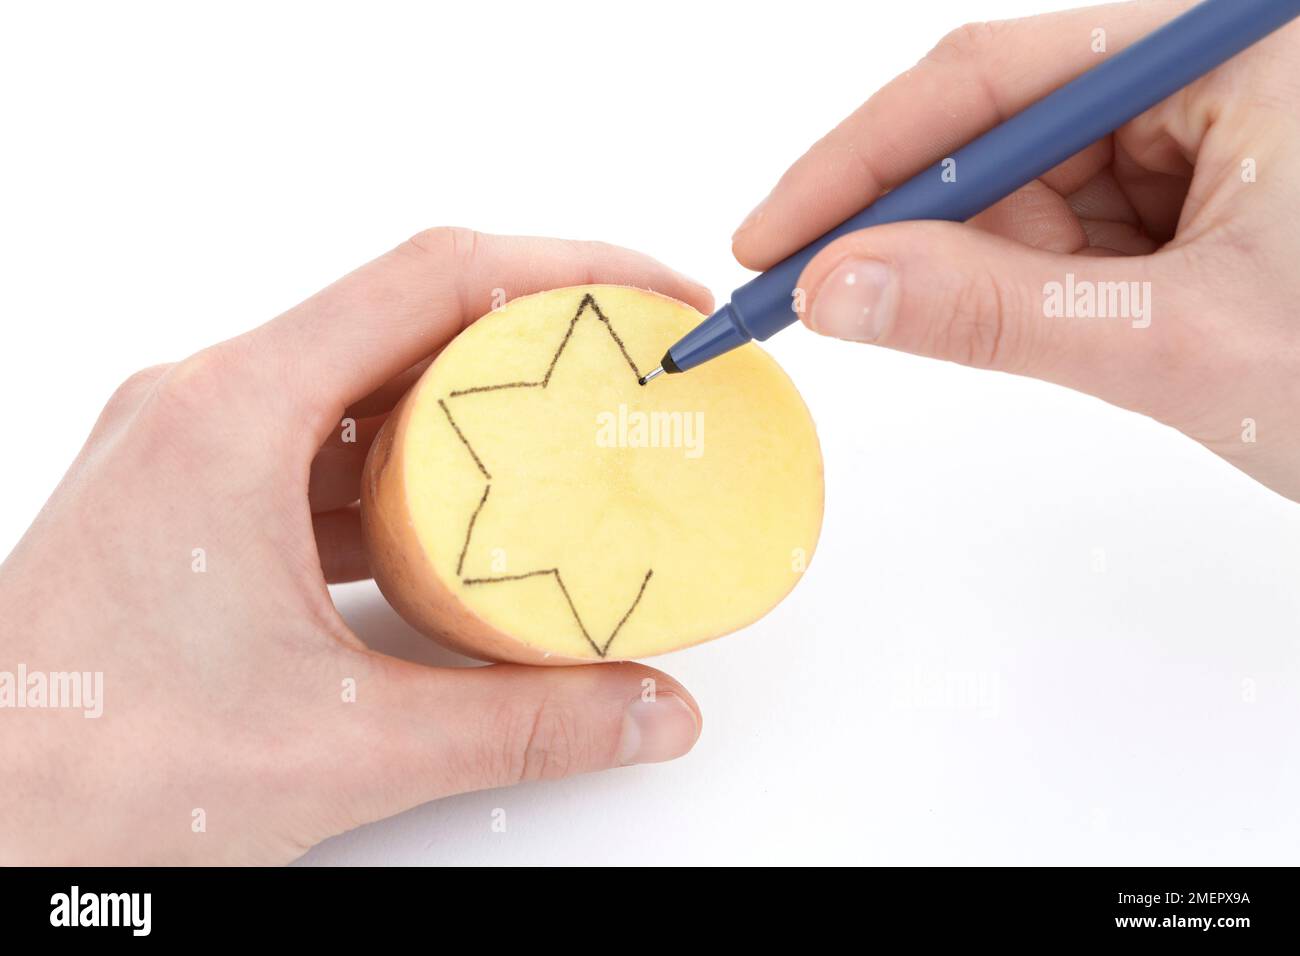 Using felt-tip-pen to draw star shape on potato stamp, close-up Stock Photo